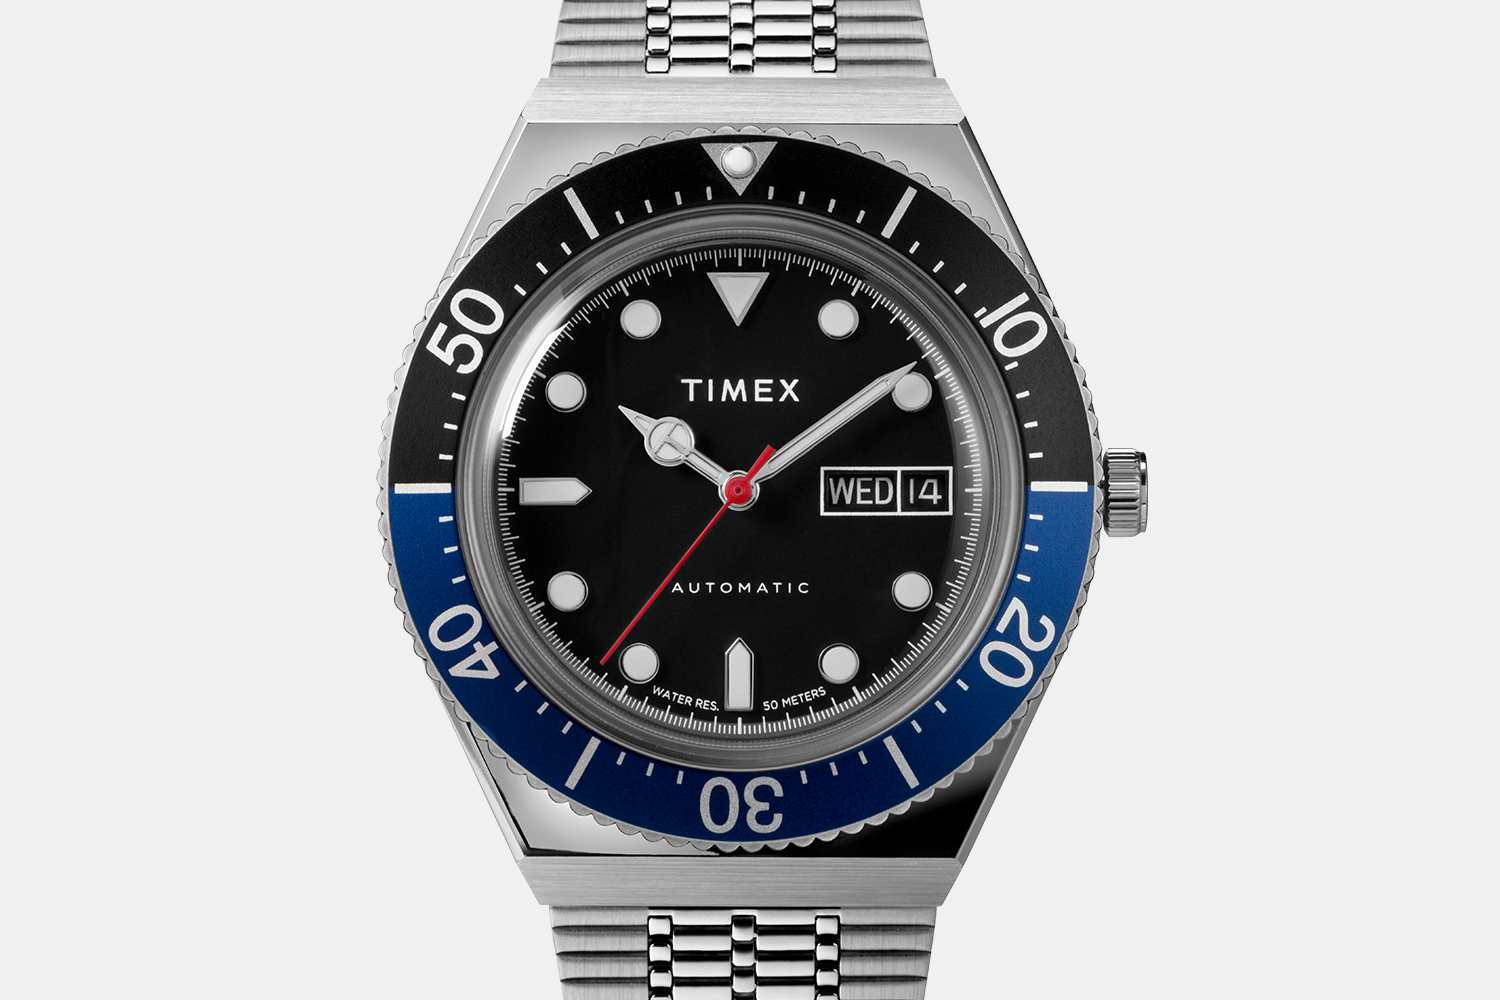 Timex M79 Automatic Watch Batman Bezel